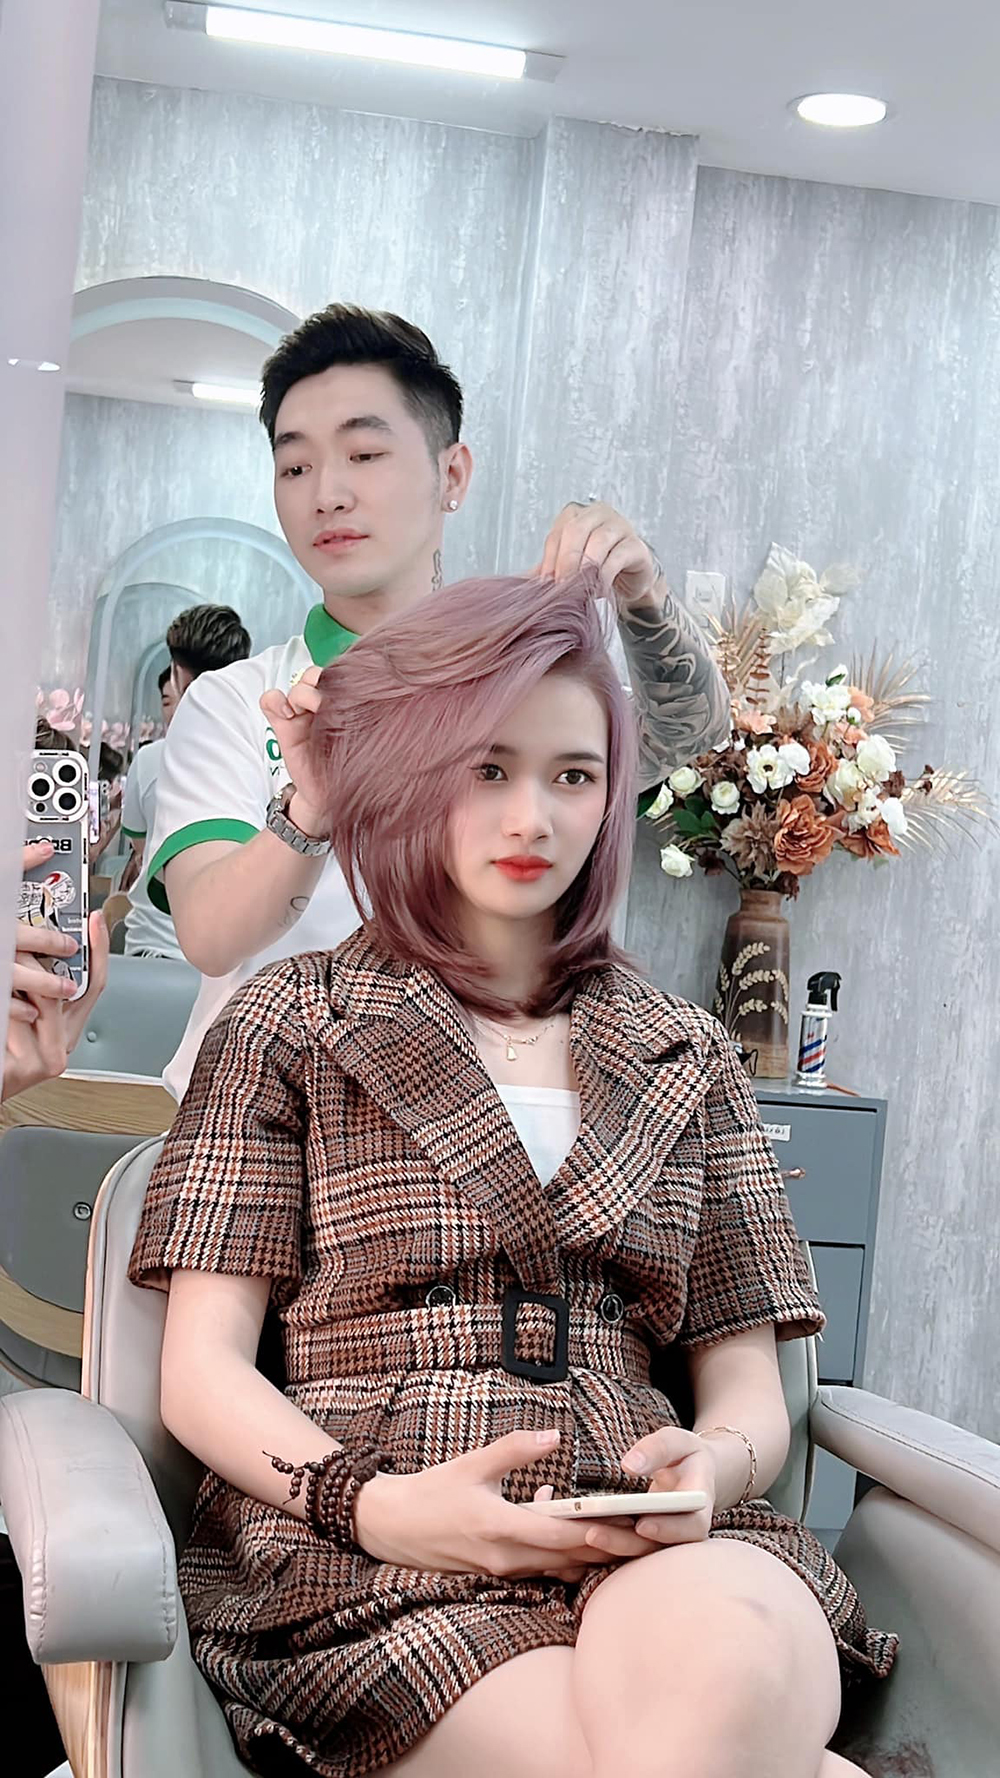 dong phuc 1686 hair salon - luxury